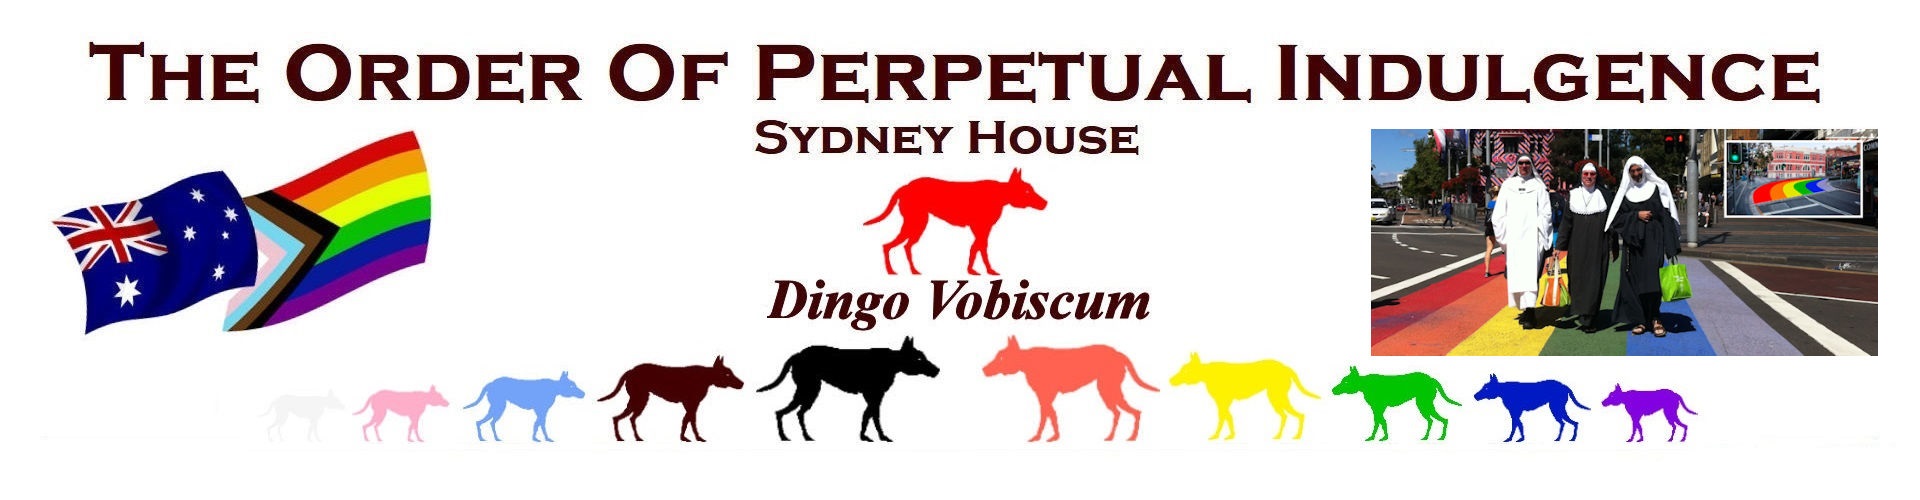 Order Of Perpetual Indulgence - Sydney House